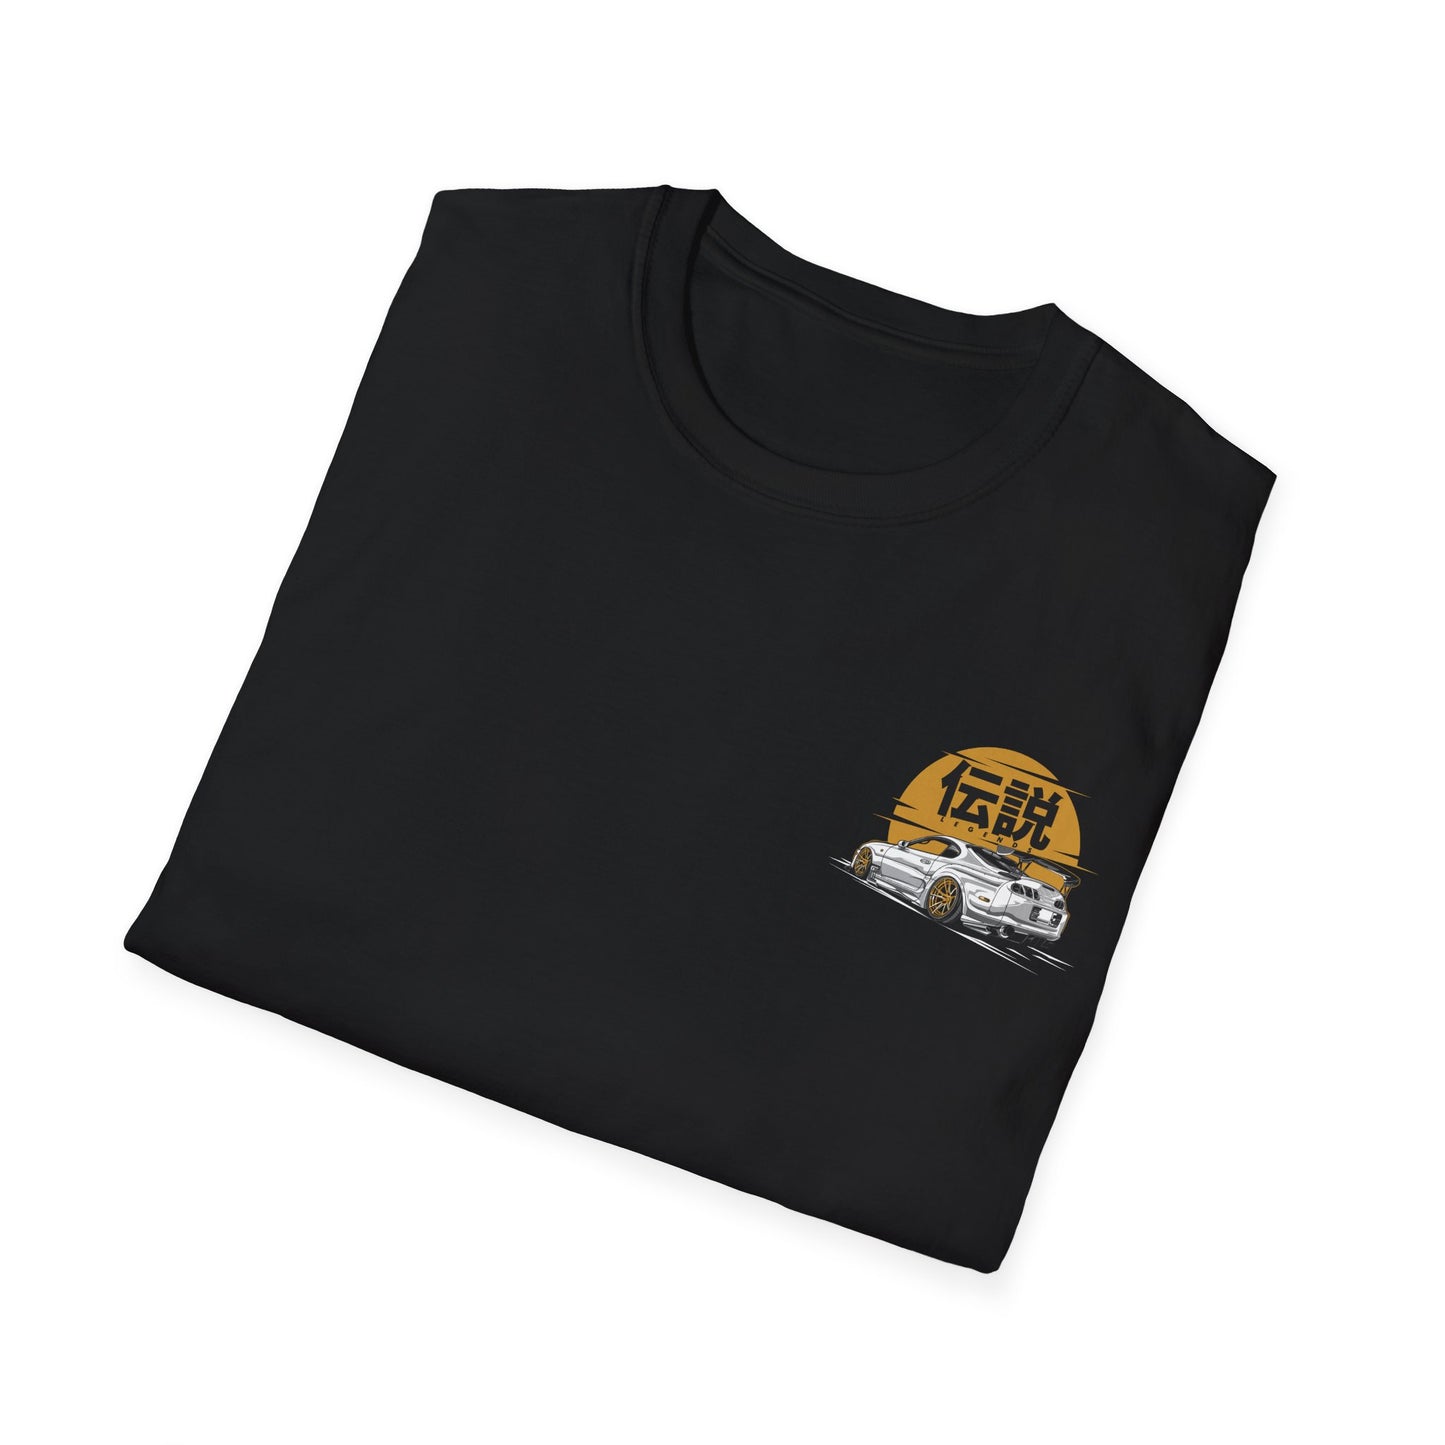 Legends-Supra Graphic Unisex Softstyle T-Shirt